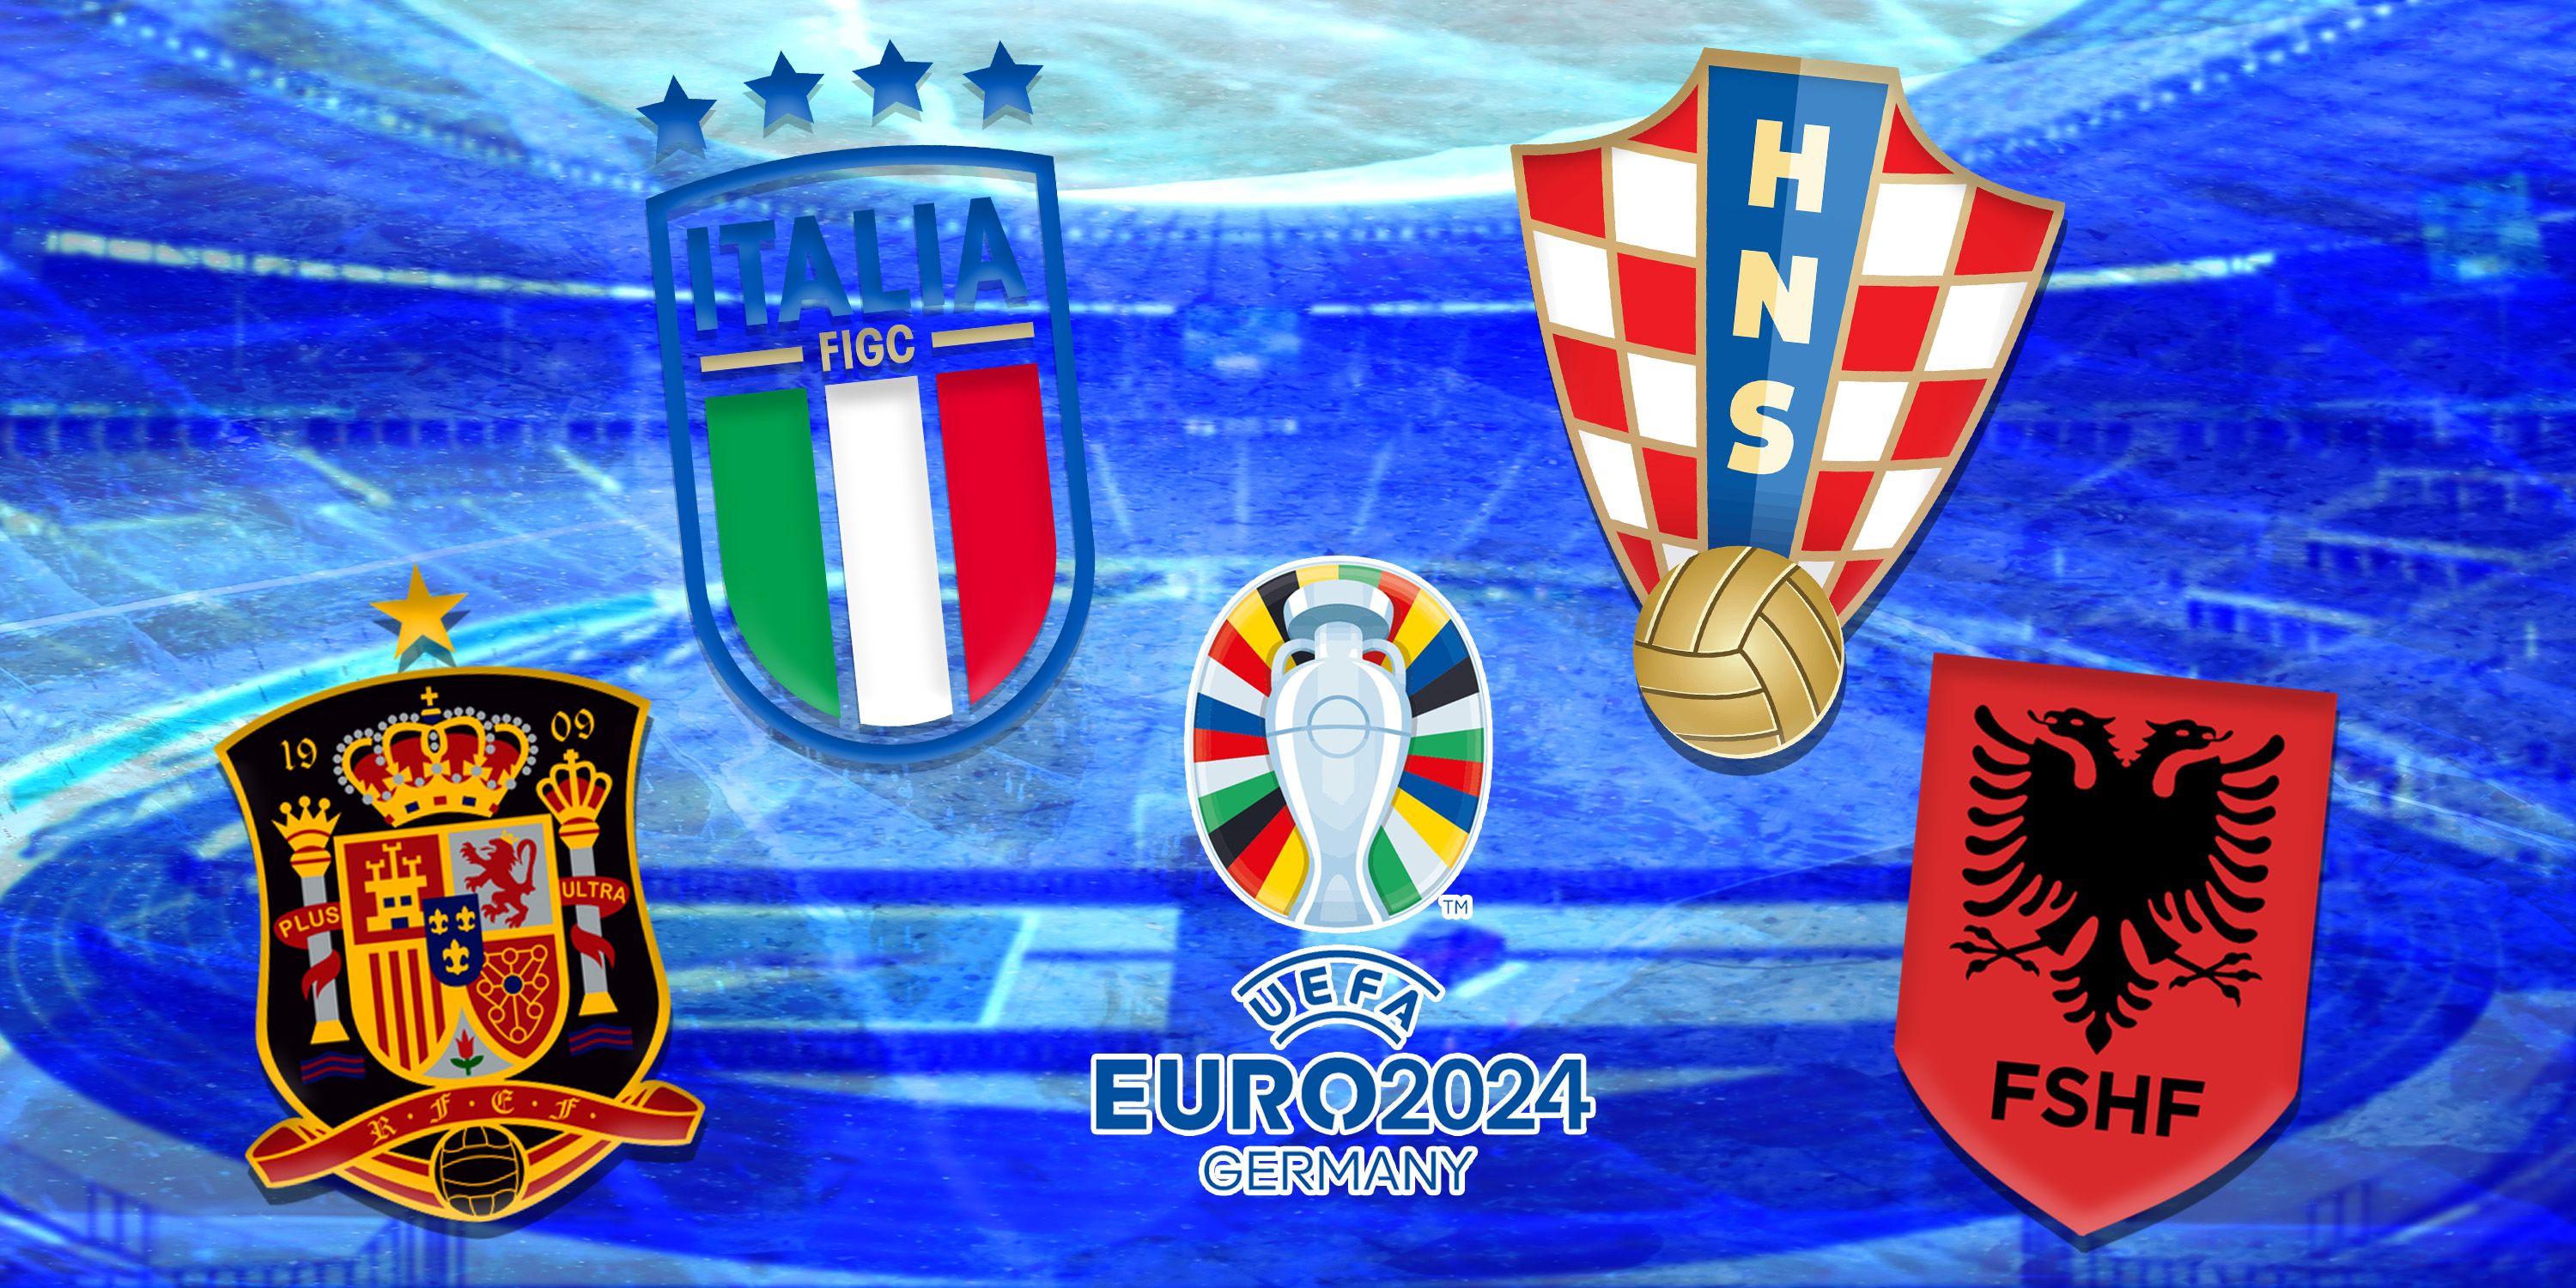 Euro 2024 Group of Death featuring Spain, Italy, Croatia and Albania badges